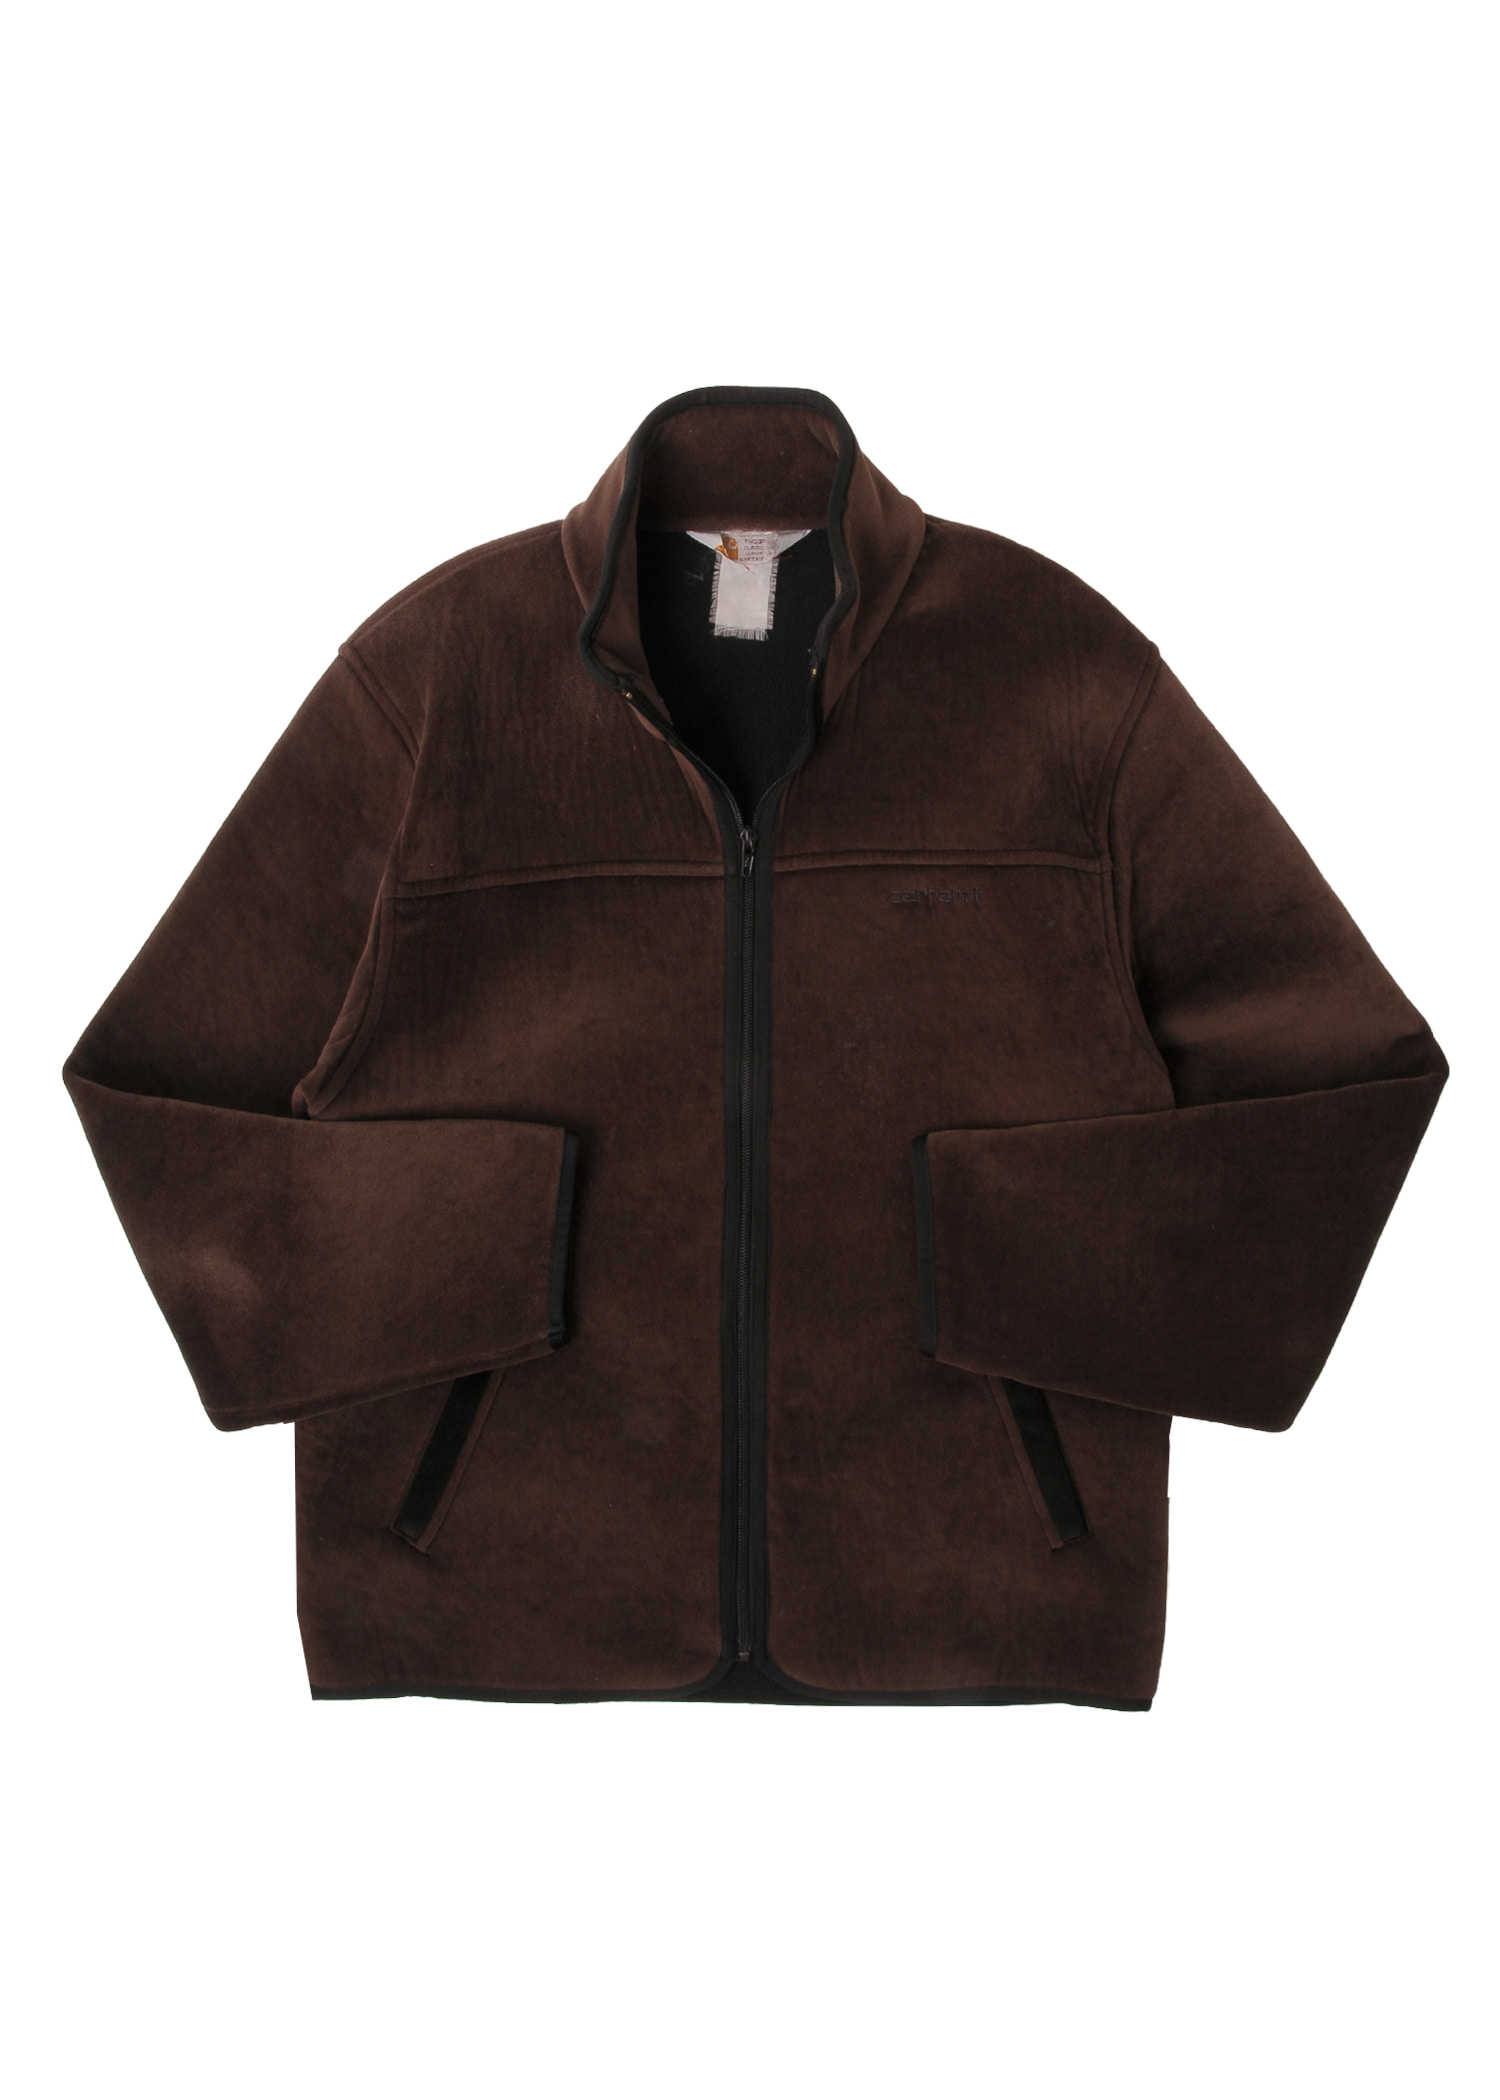 Carhartt fleece jacket